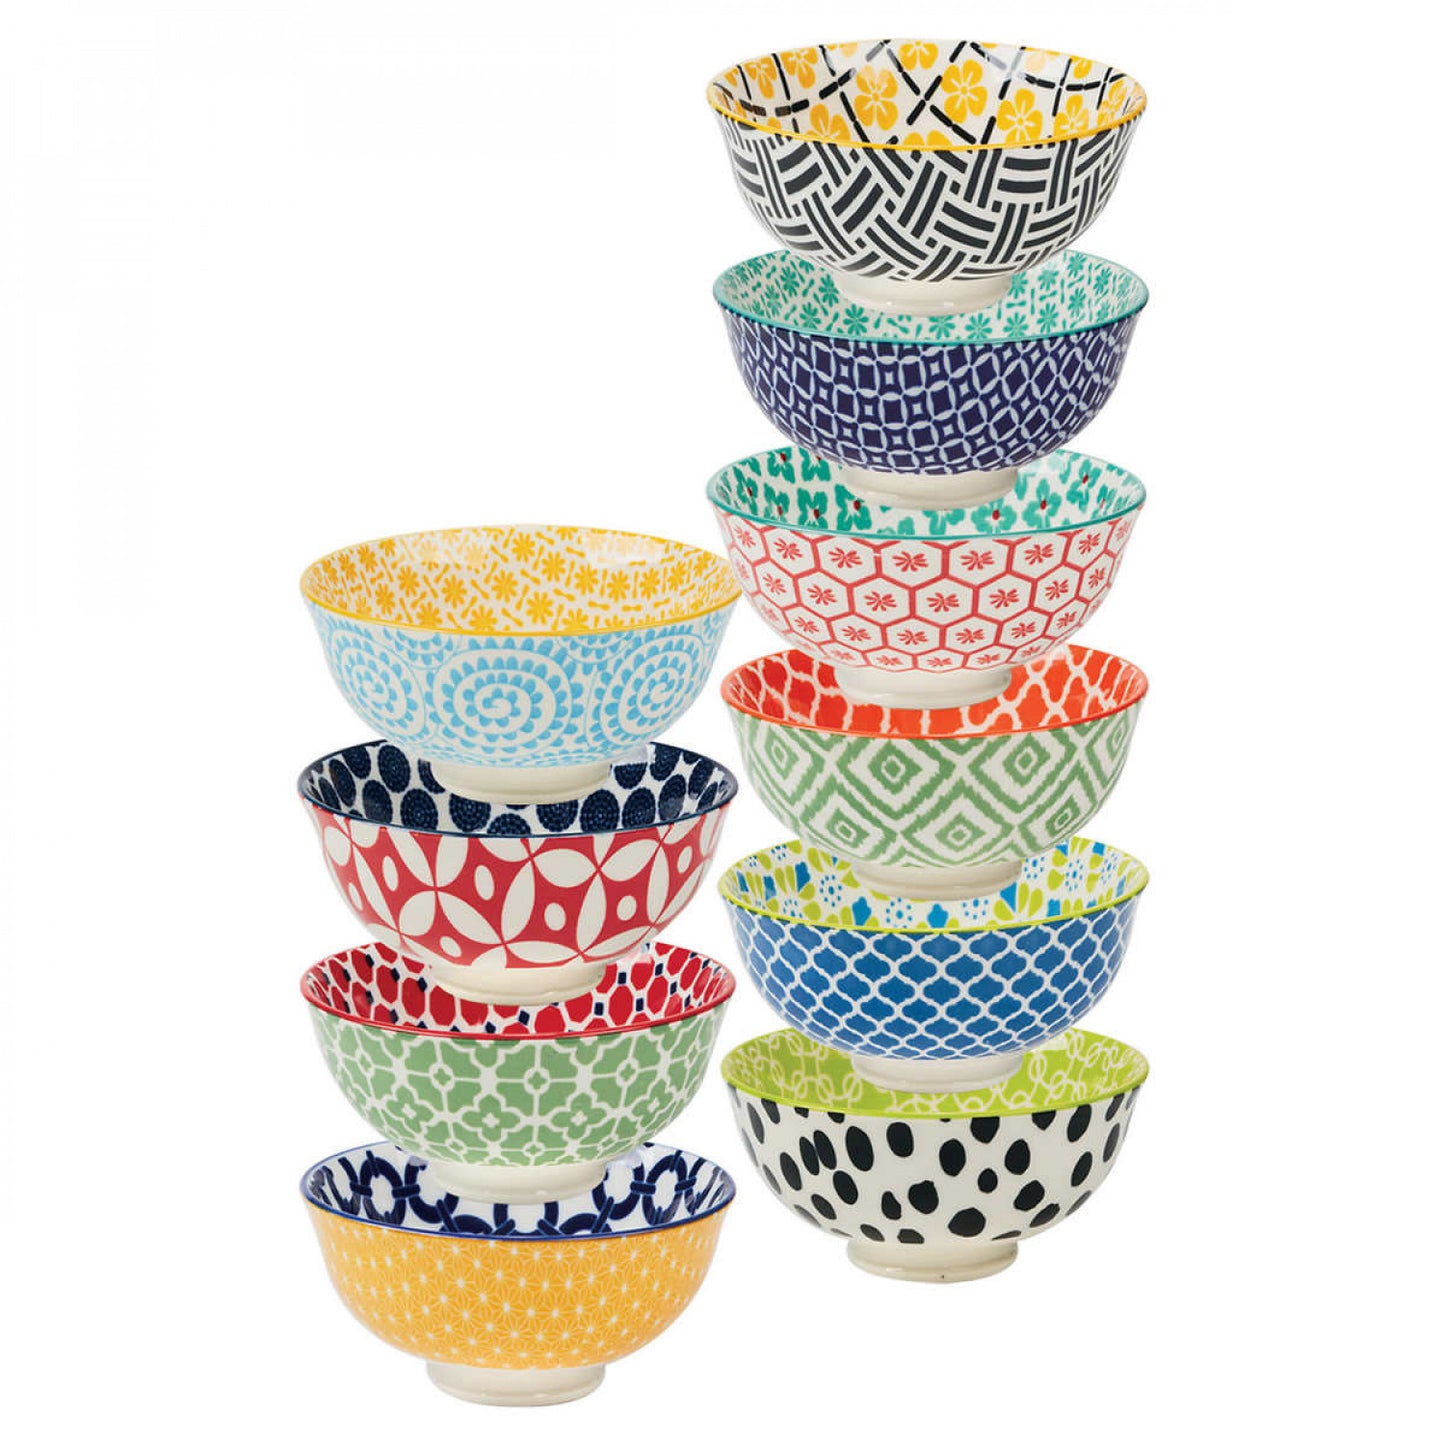 10 Chelsea Stoneware Bowls